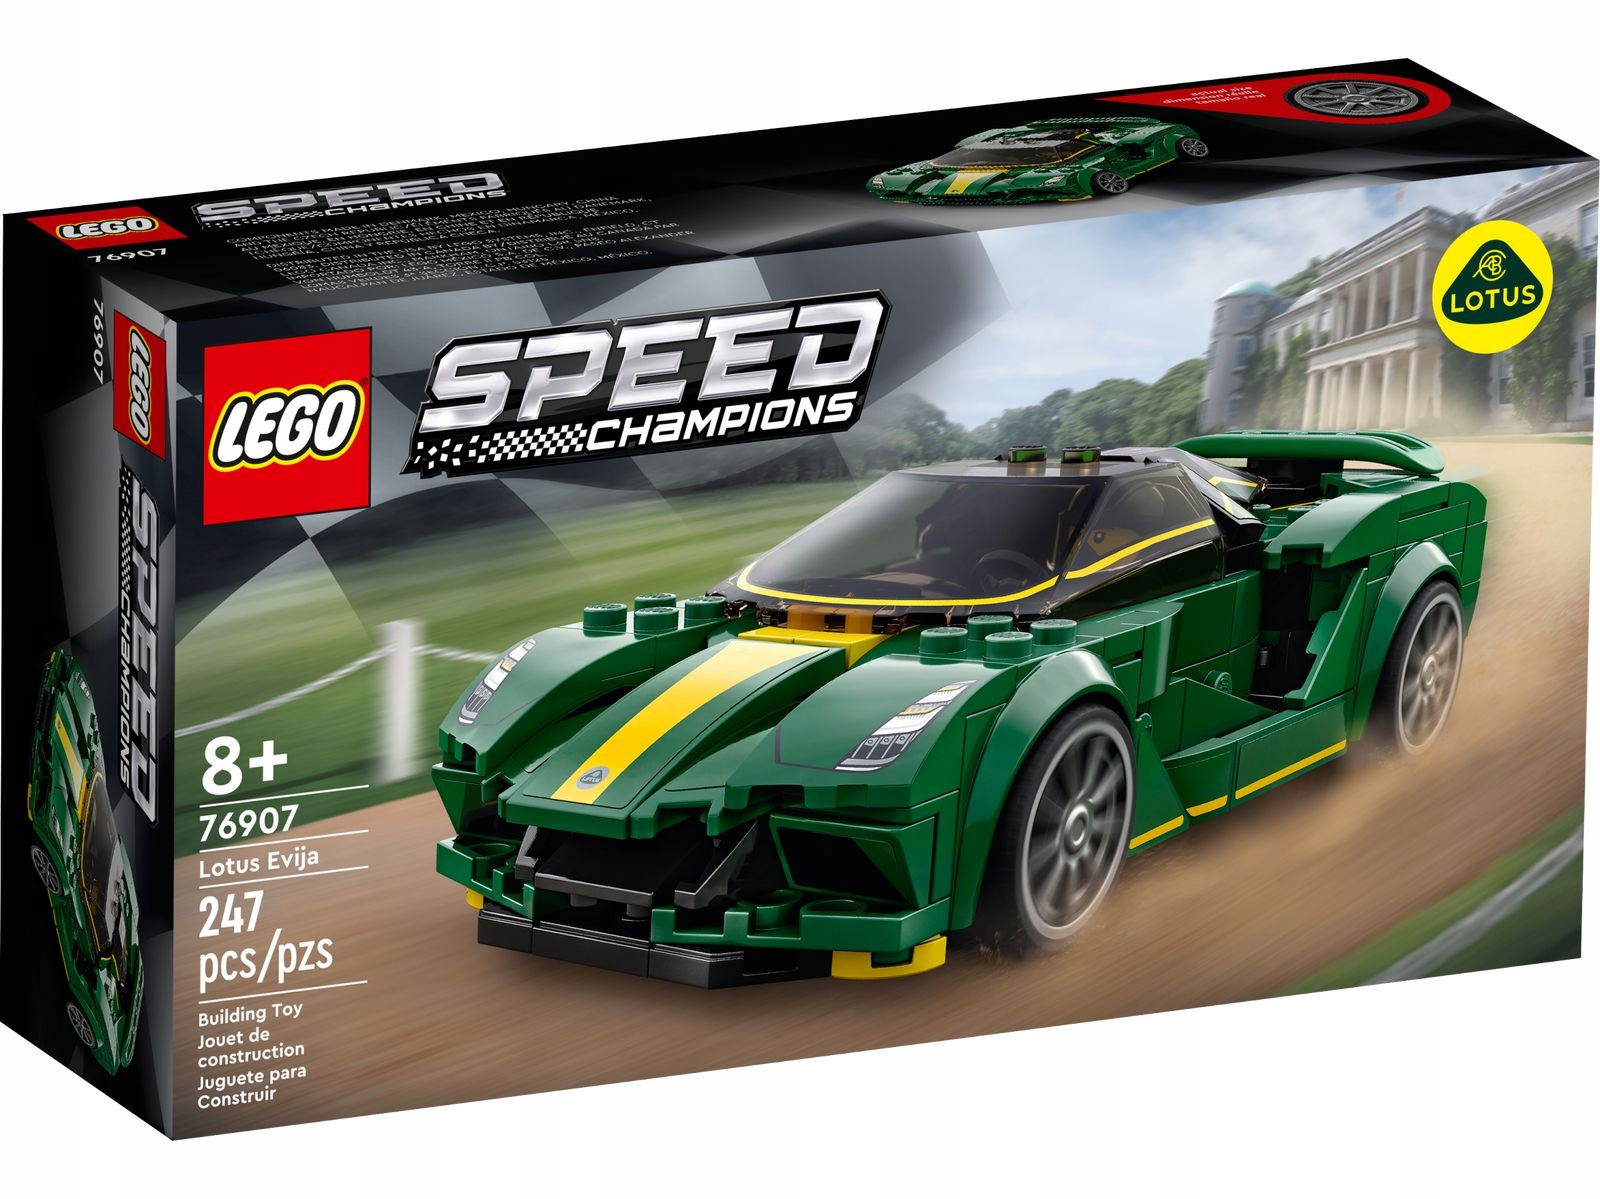 LEGO SPEED CHAMPIONS 76907 LOTUS EVIJA EAN 5702017156712